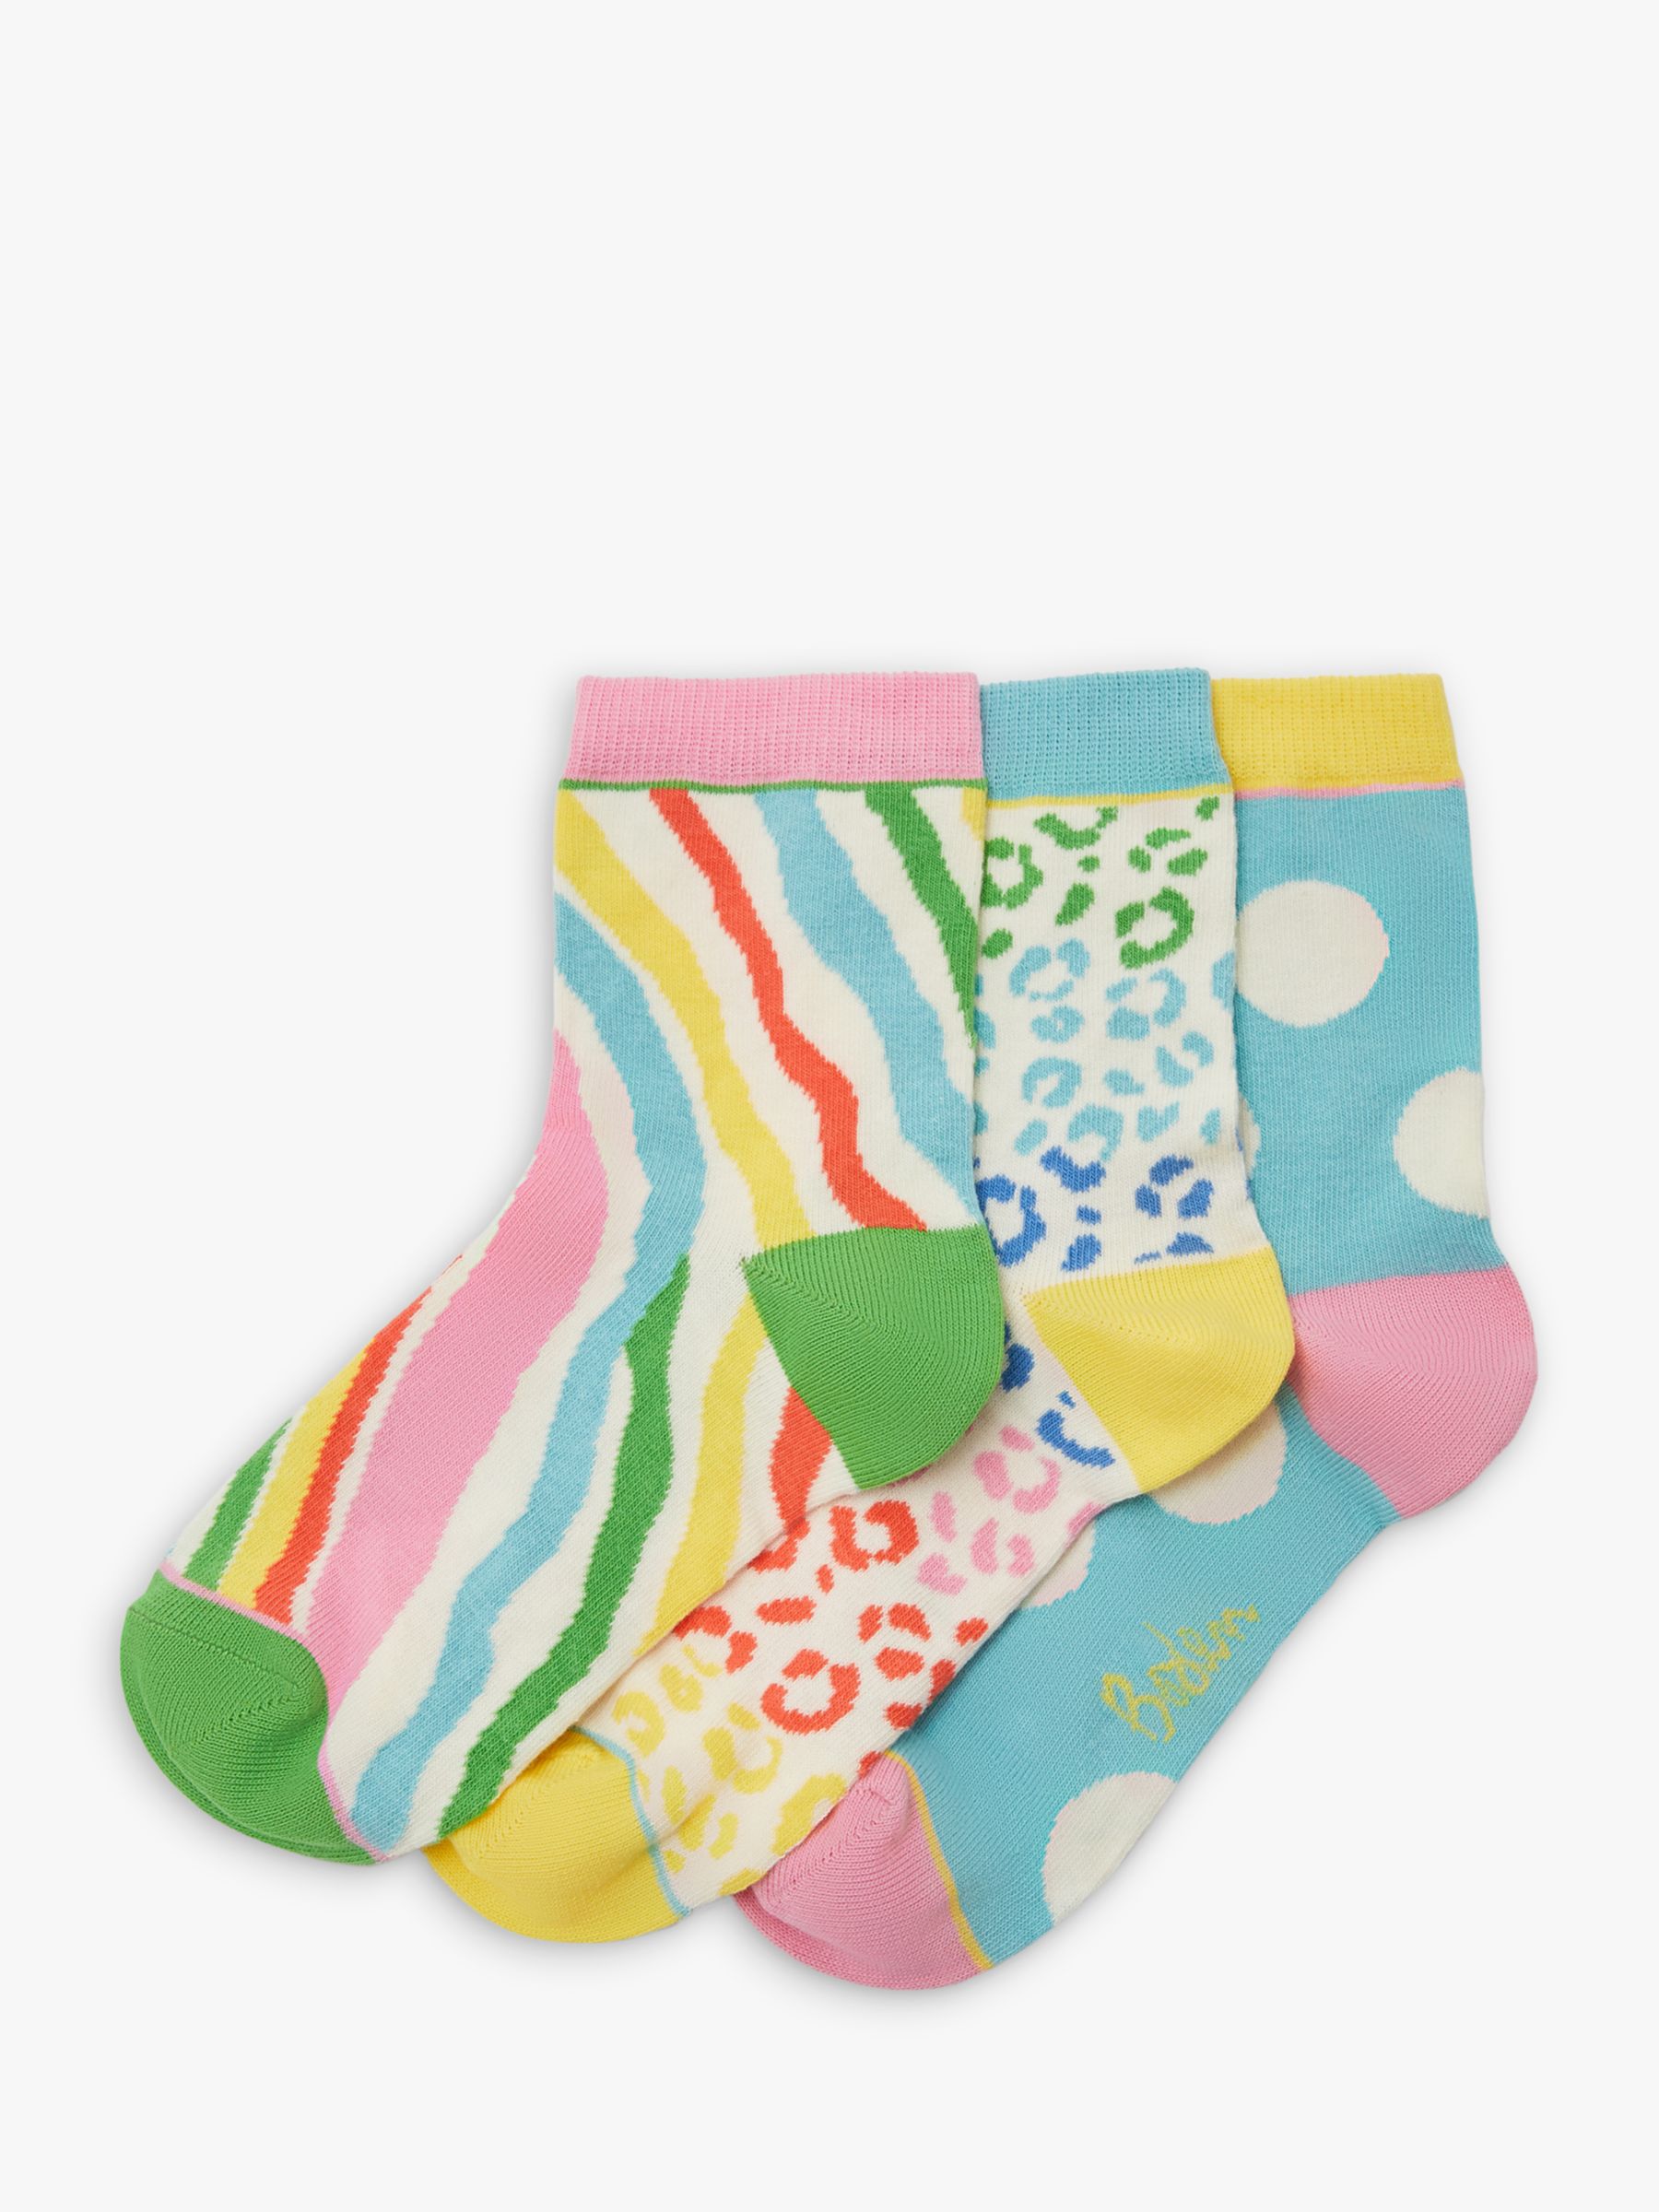 Boden Spot and Animal Print Ankle Socks, Pack of 3, Multi at John Lewis ...